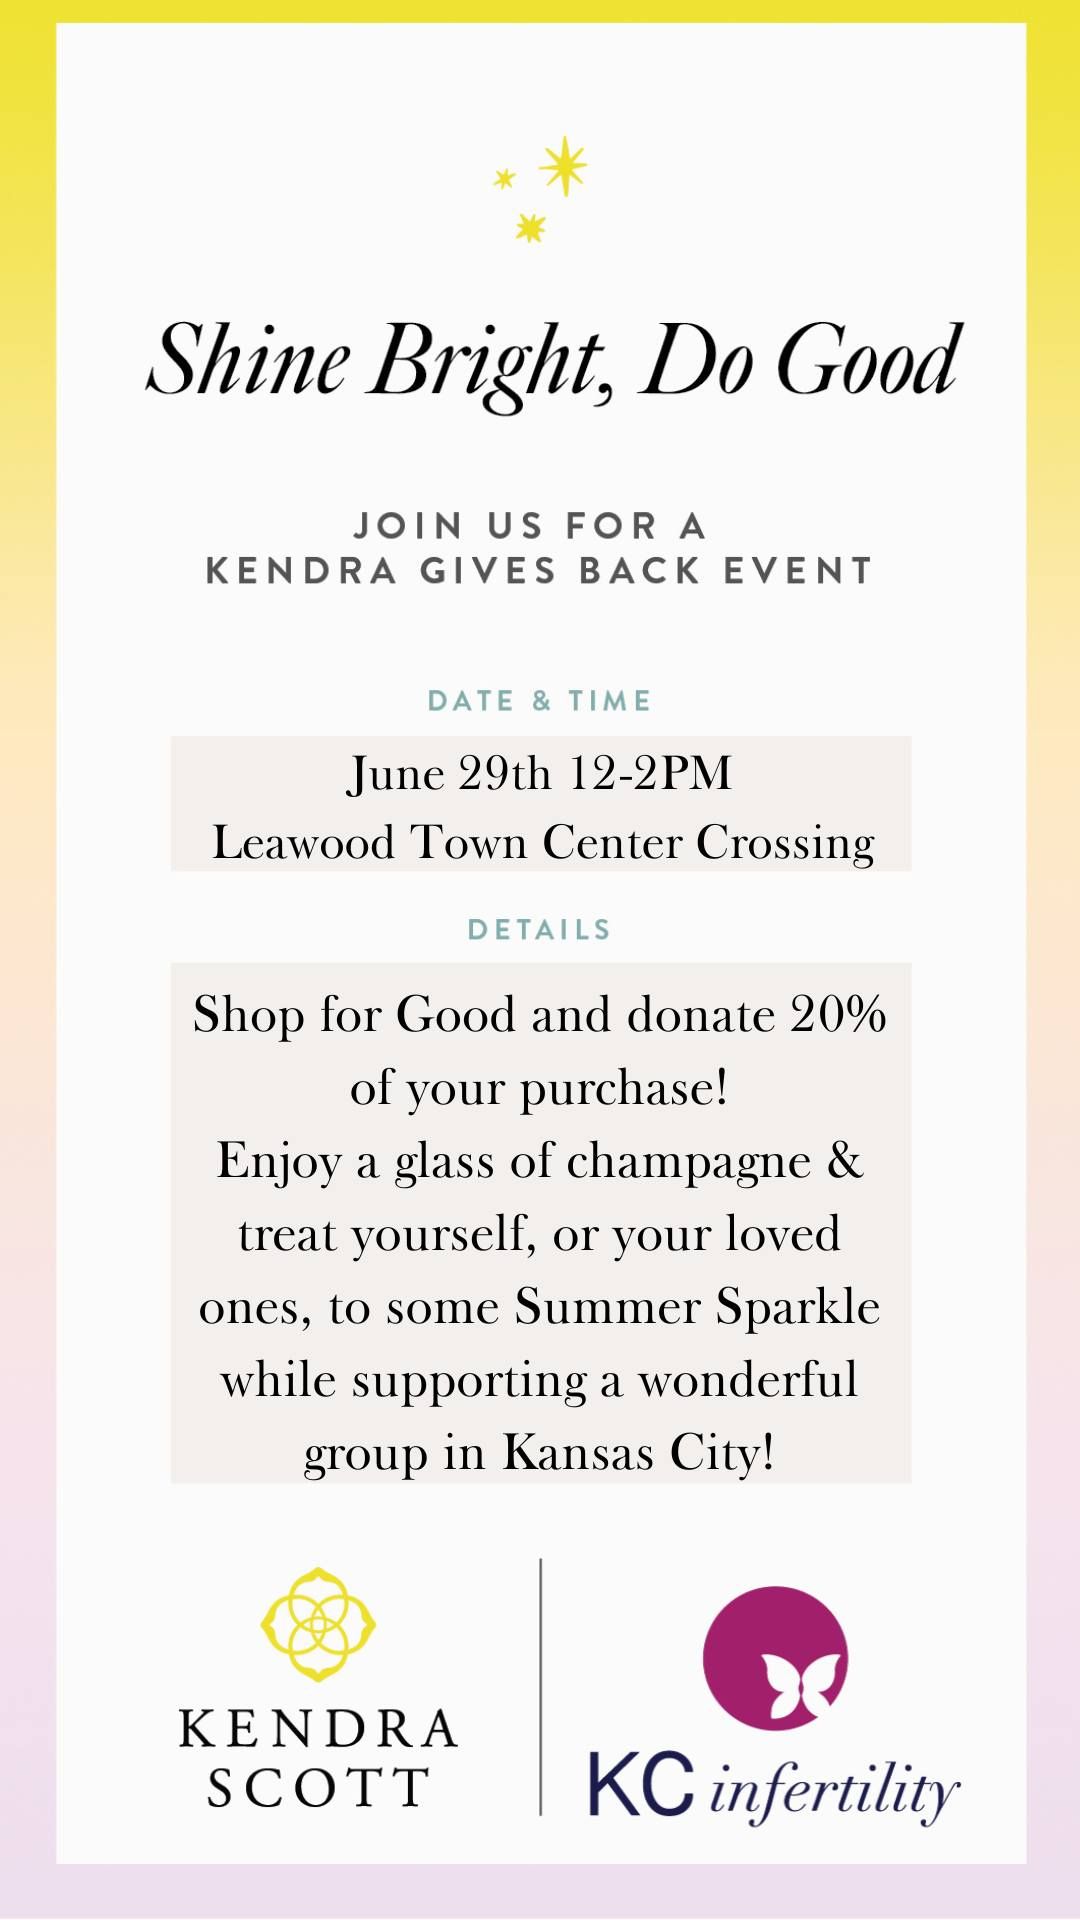 Kendra Scott Fundraiser for KCinfertility